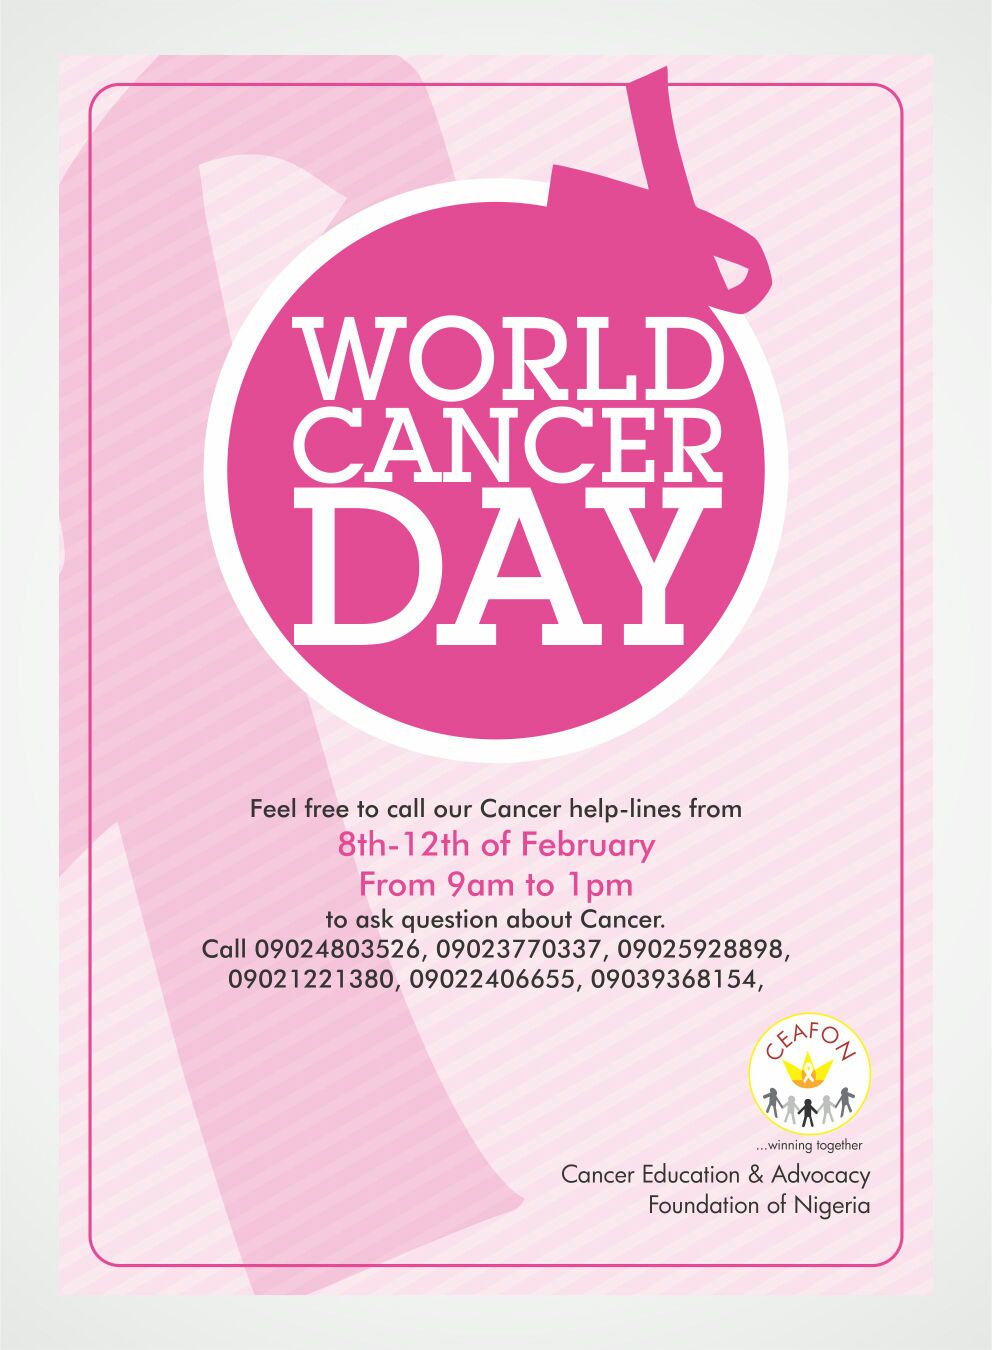 CEAFON World Cancer Day Event